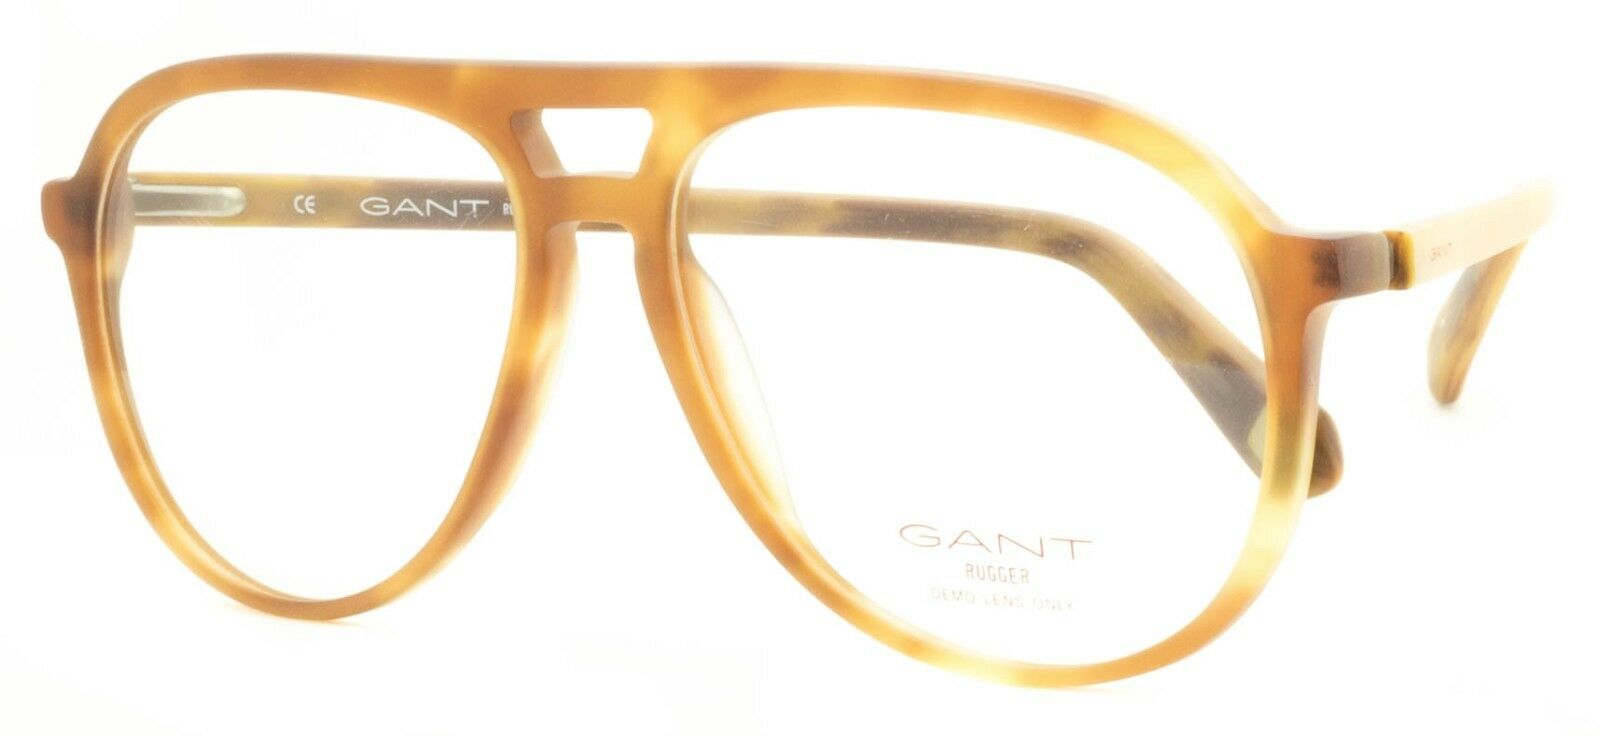 GANT RUGGER GR FRED MAMB RX Optical Eyewear FRAMES Glasses Eyeglasses - New